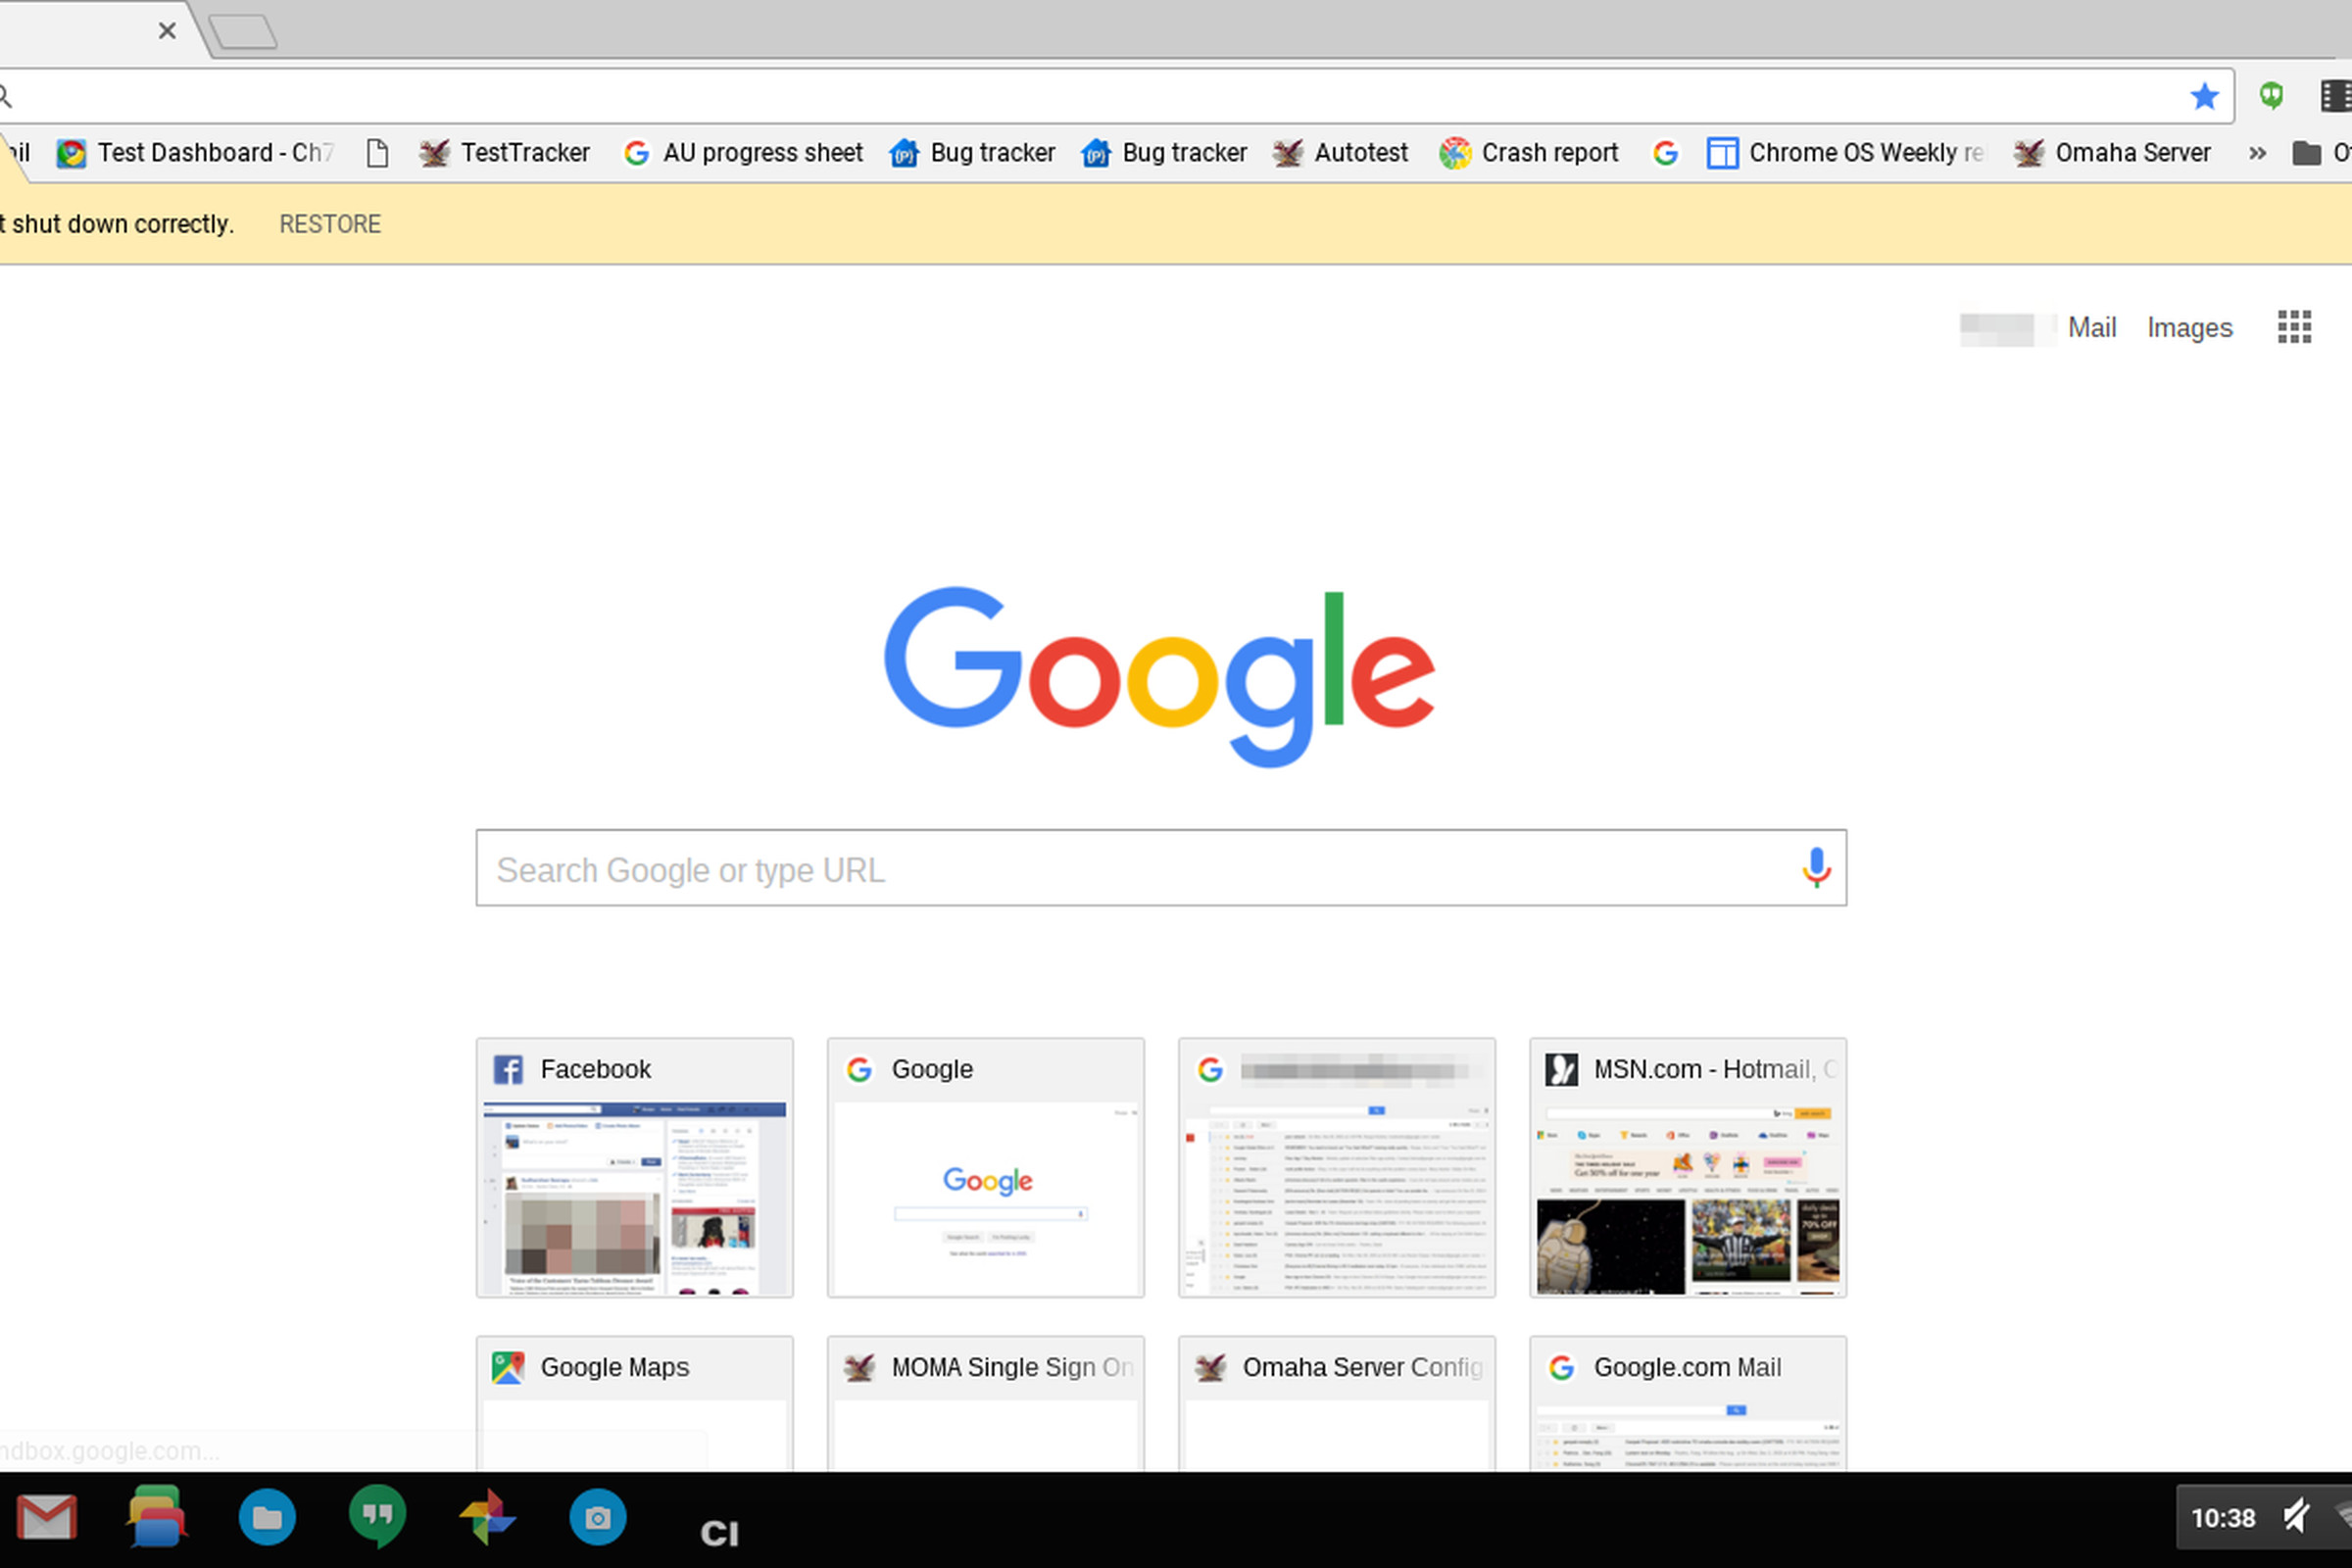 Google offline installer